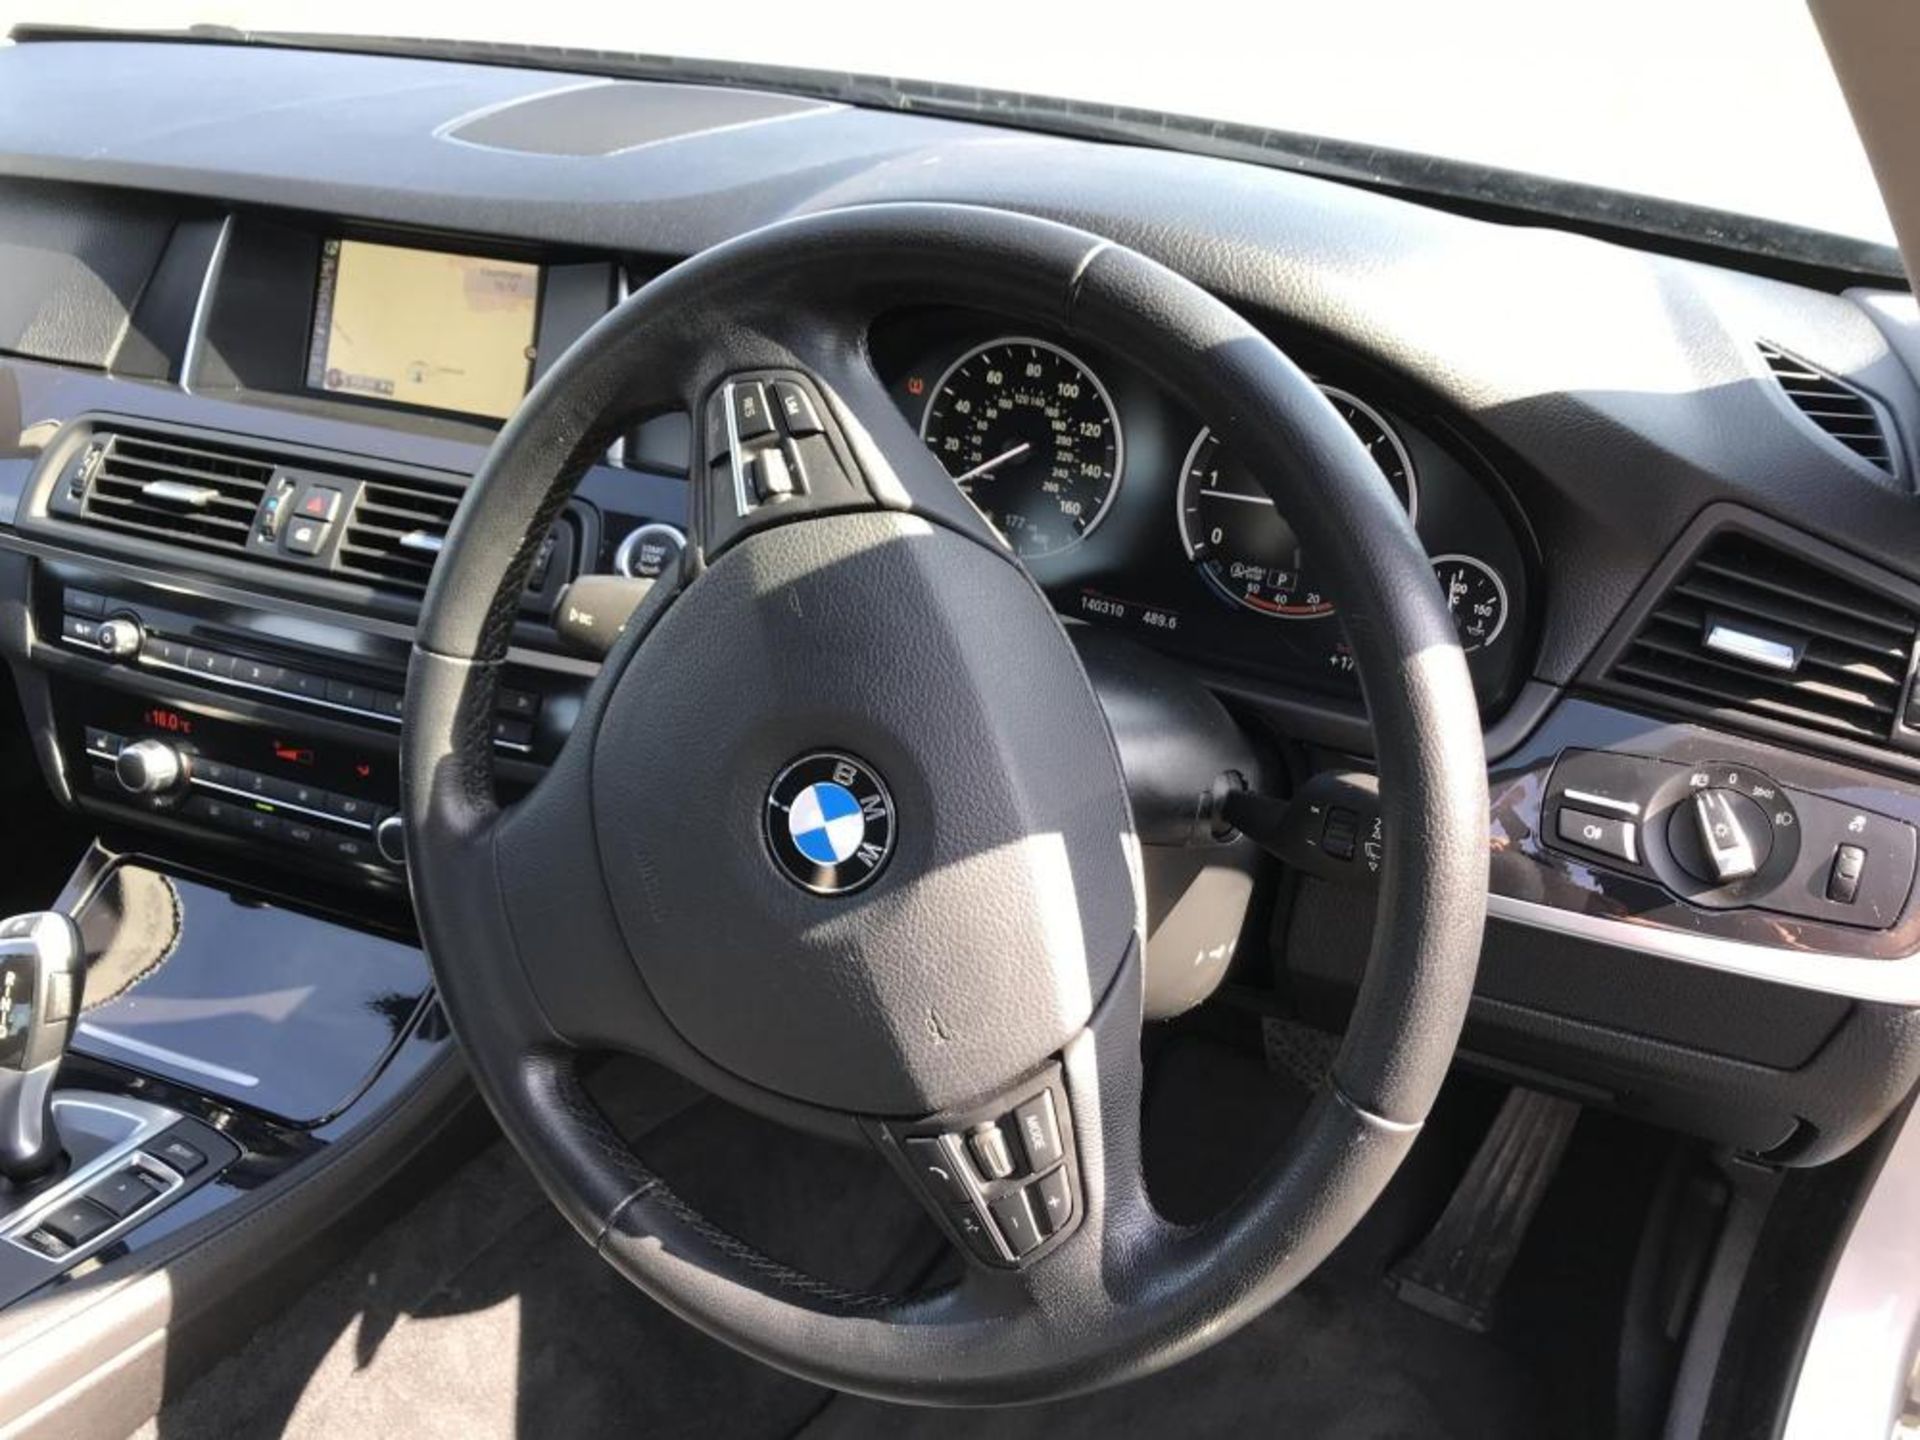 2015/65 REG BMW 520D SE AUTO 2.0 DIESEL 4 DOOR SALOON, SHOWING 0 FORMER KEEPERS *NO VAT* - Image 17 of 19